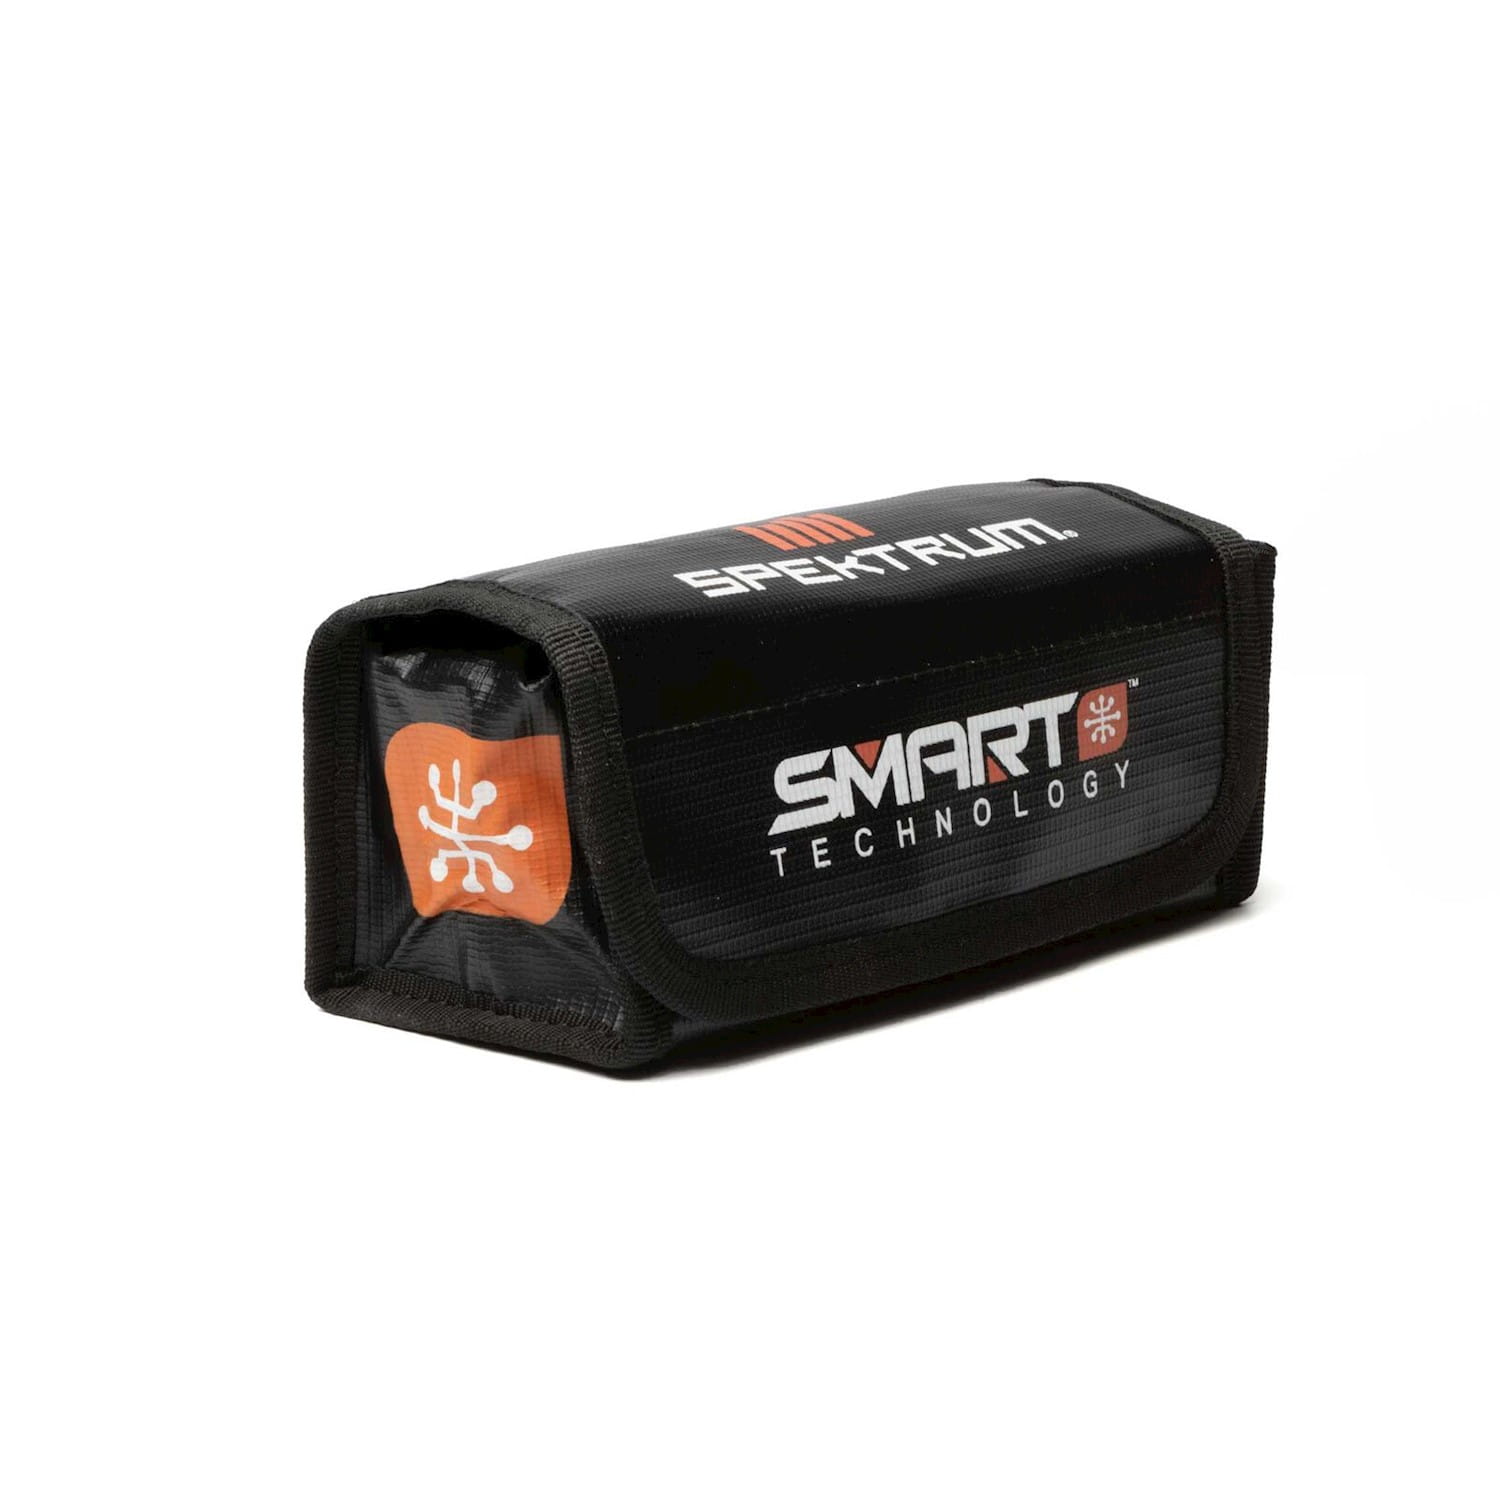 Spektrum Smart Lipo Bag, 16 x7.5 x 6.5 cm